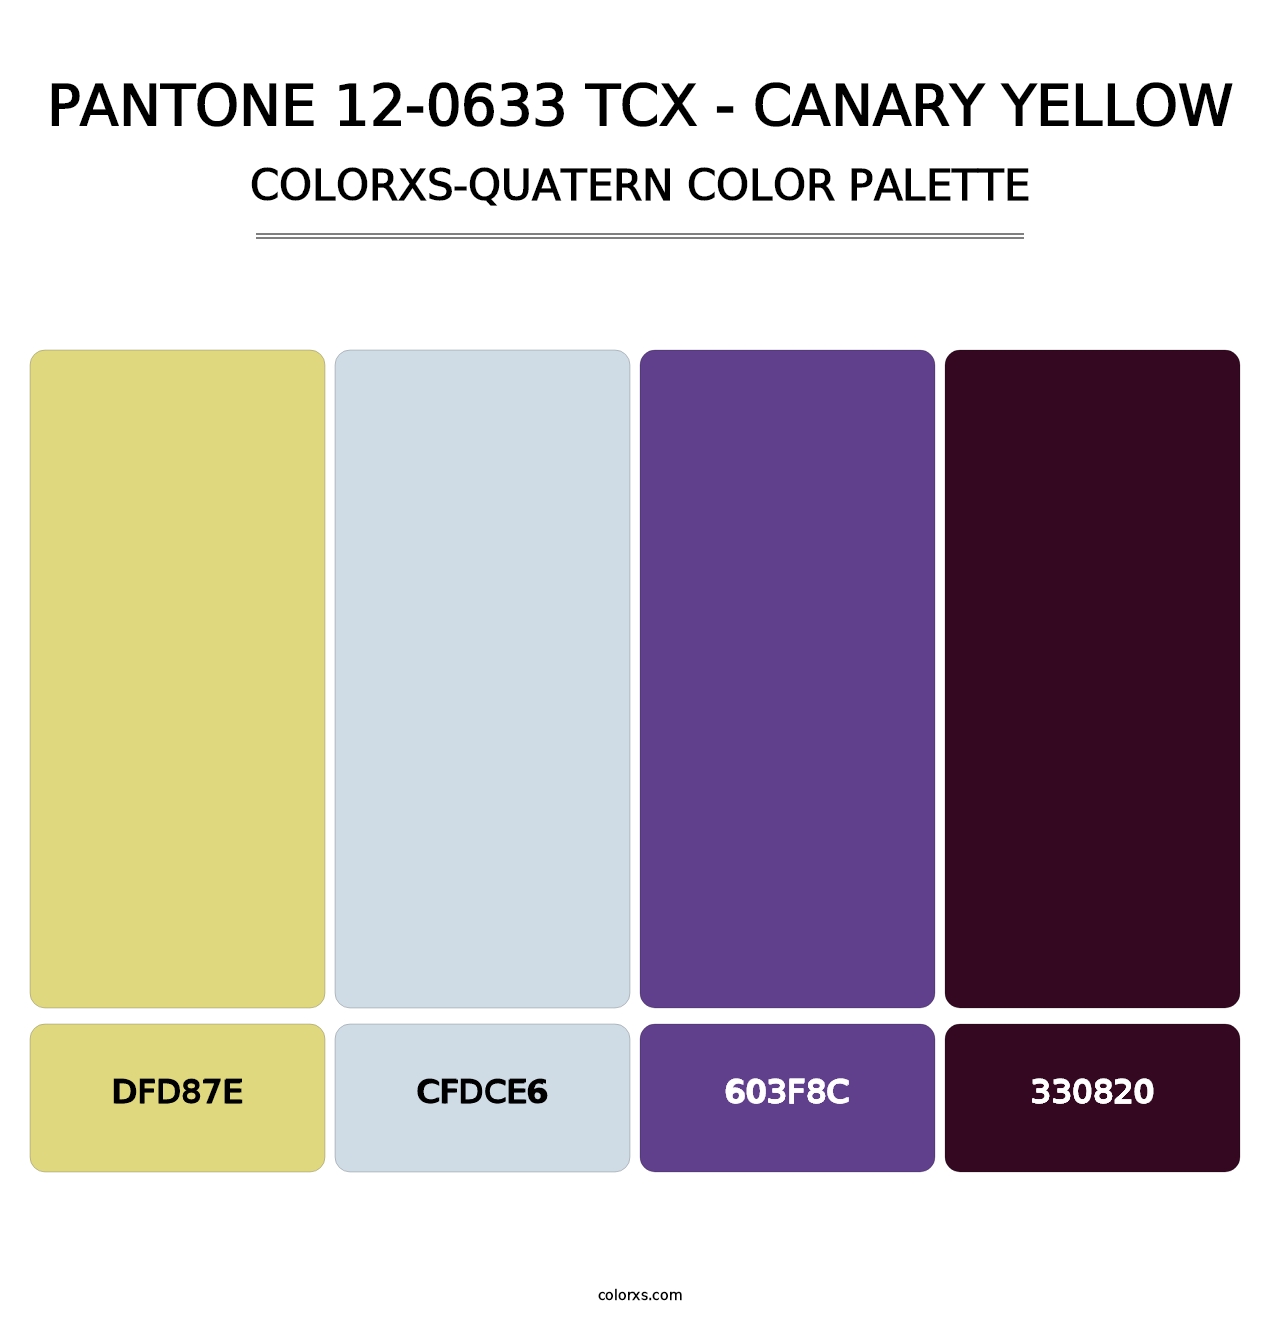 PANTONE 12-0633 TCX - Canary Yellow - Colorxs Quatern Palette